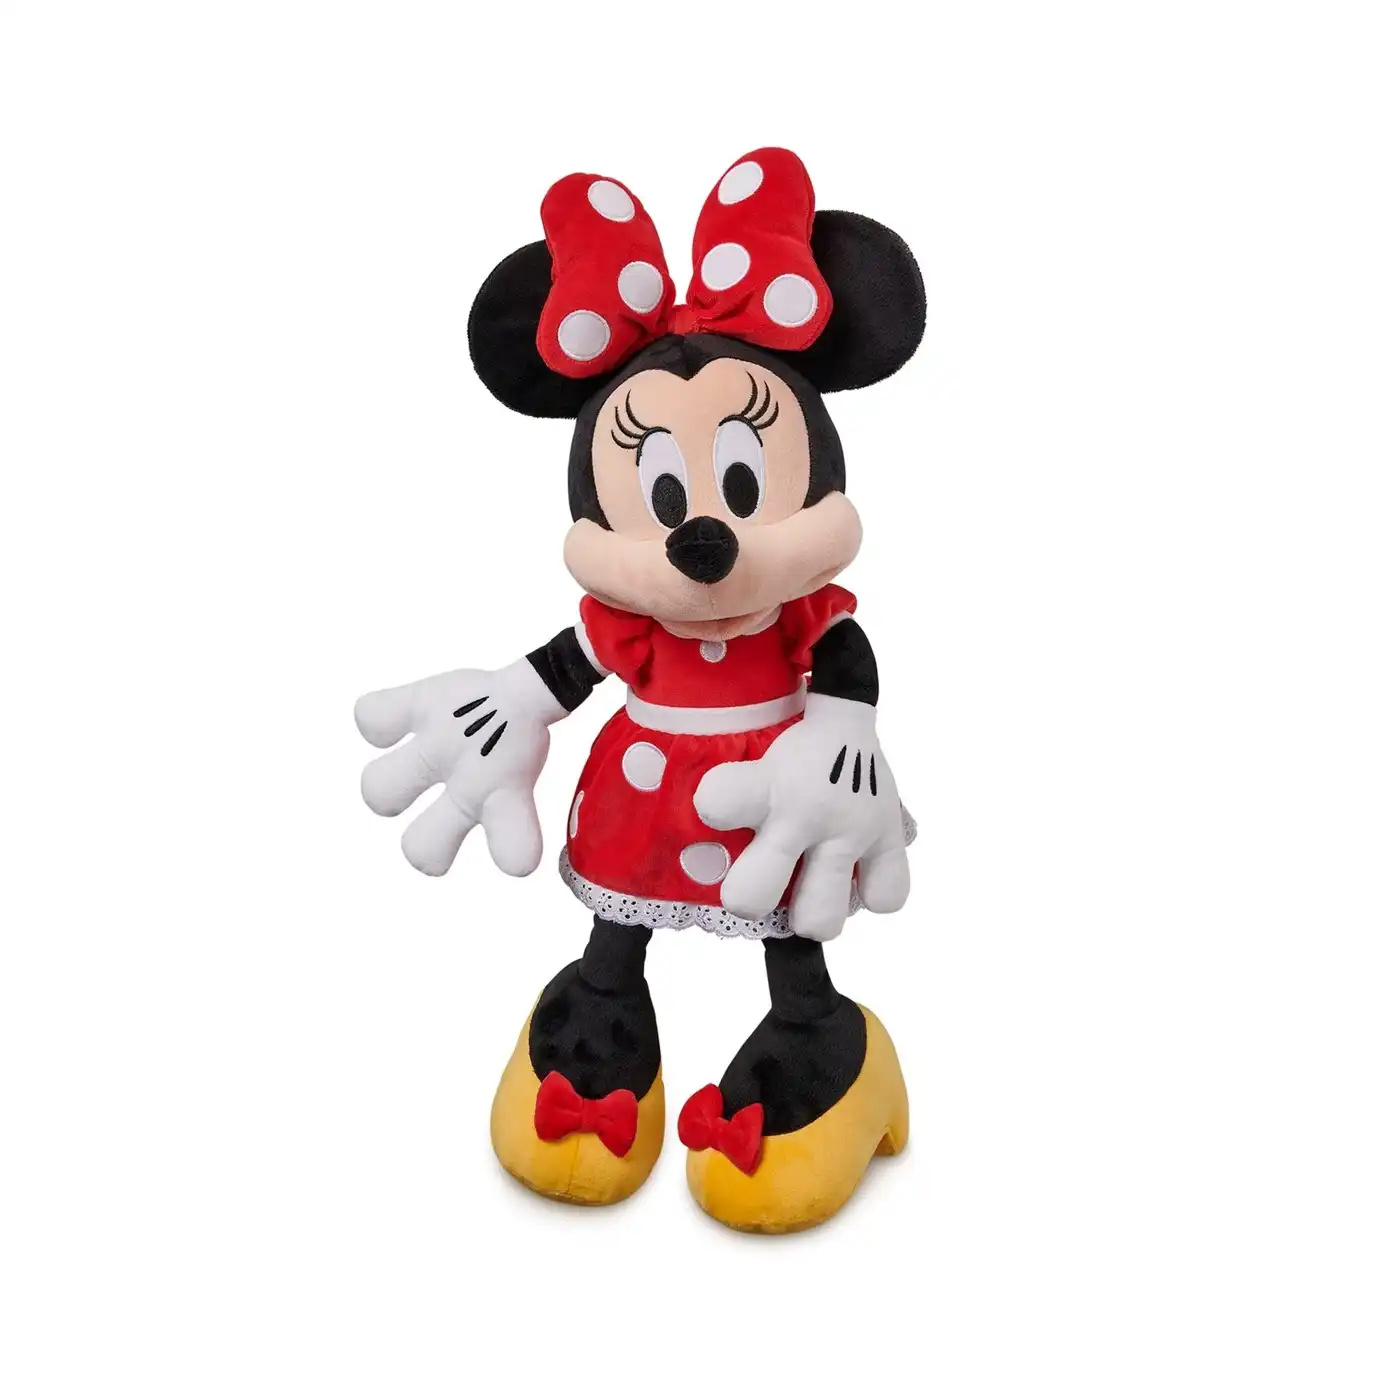 Disney Medium Plush - Minnie